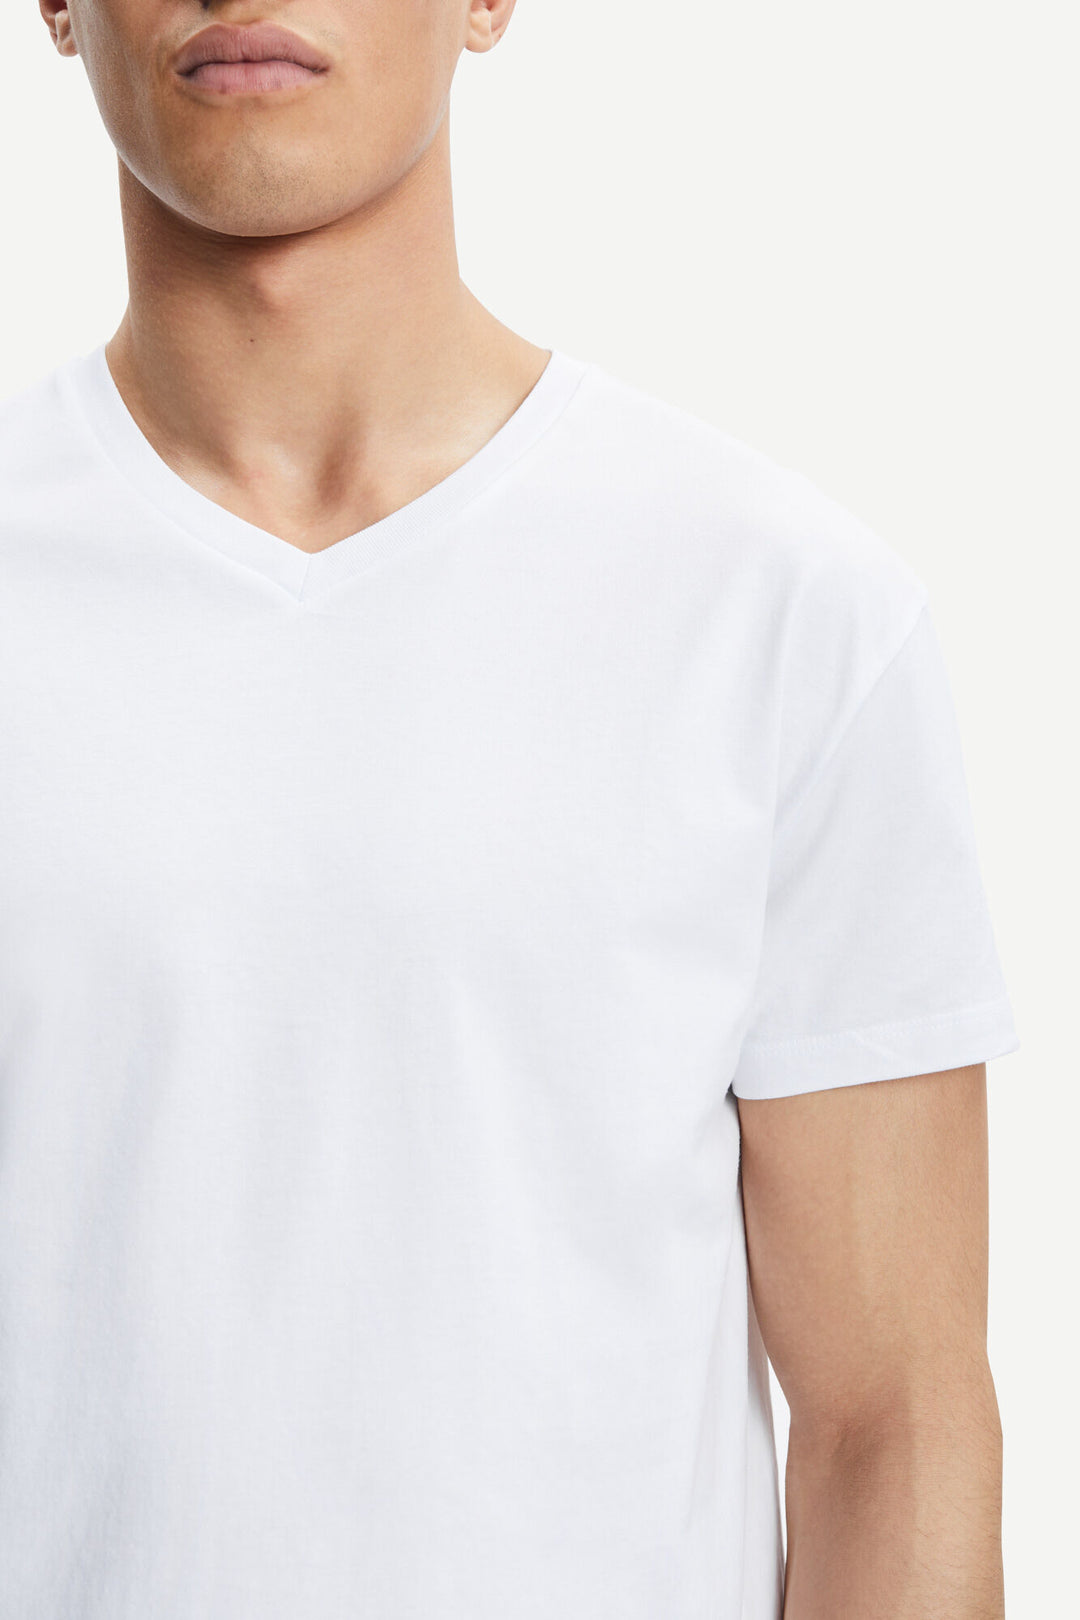 Kronos V-Neck T-Shirt White